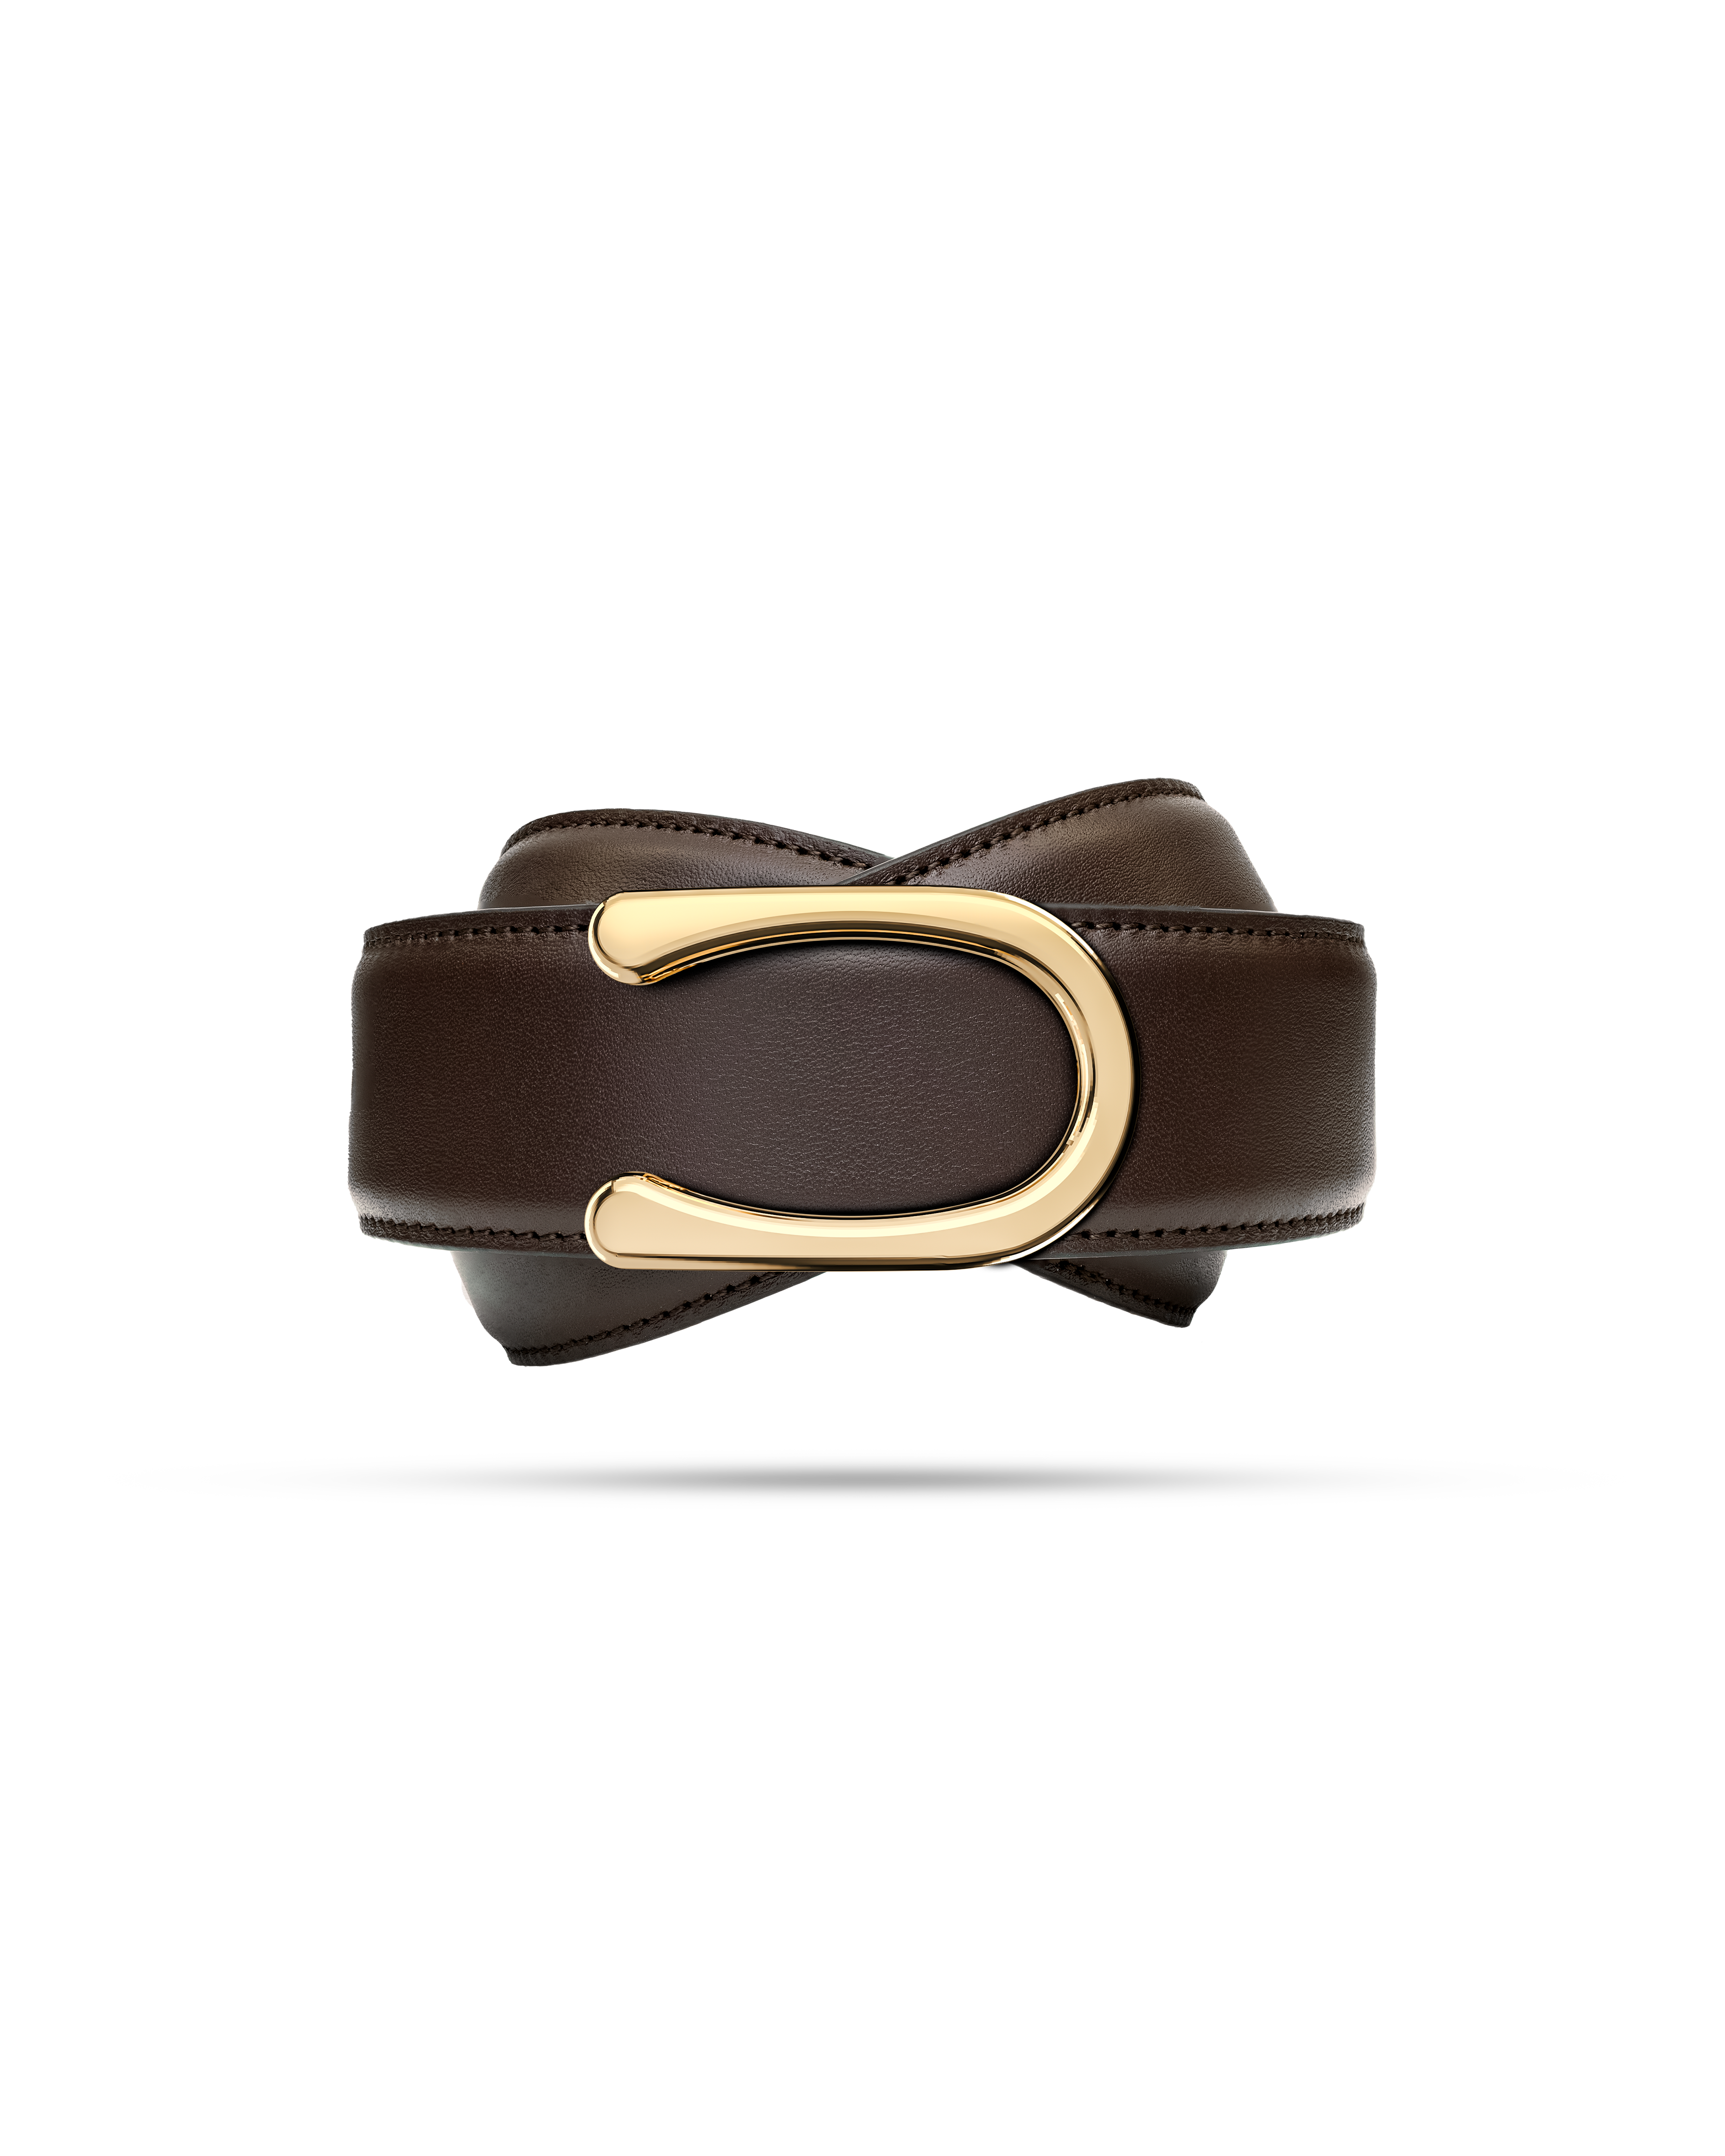 Model II Gold  —  Calfskin Chocolate Brown